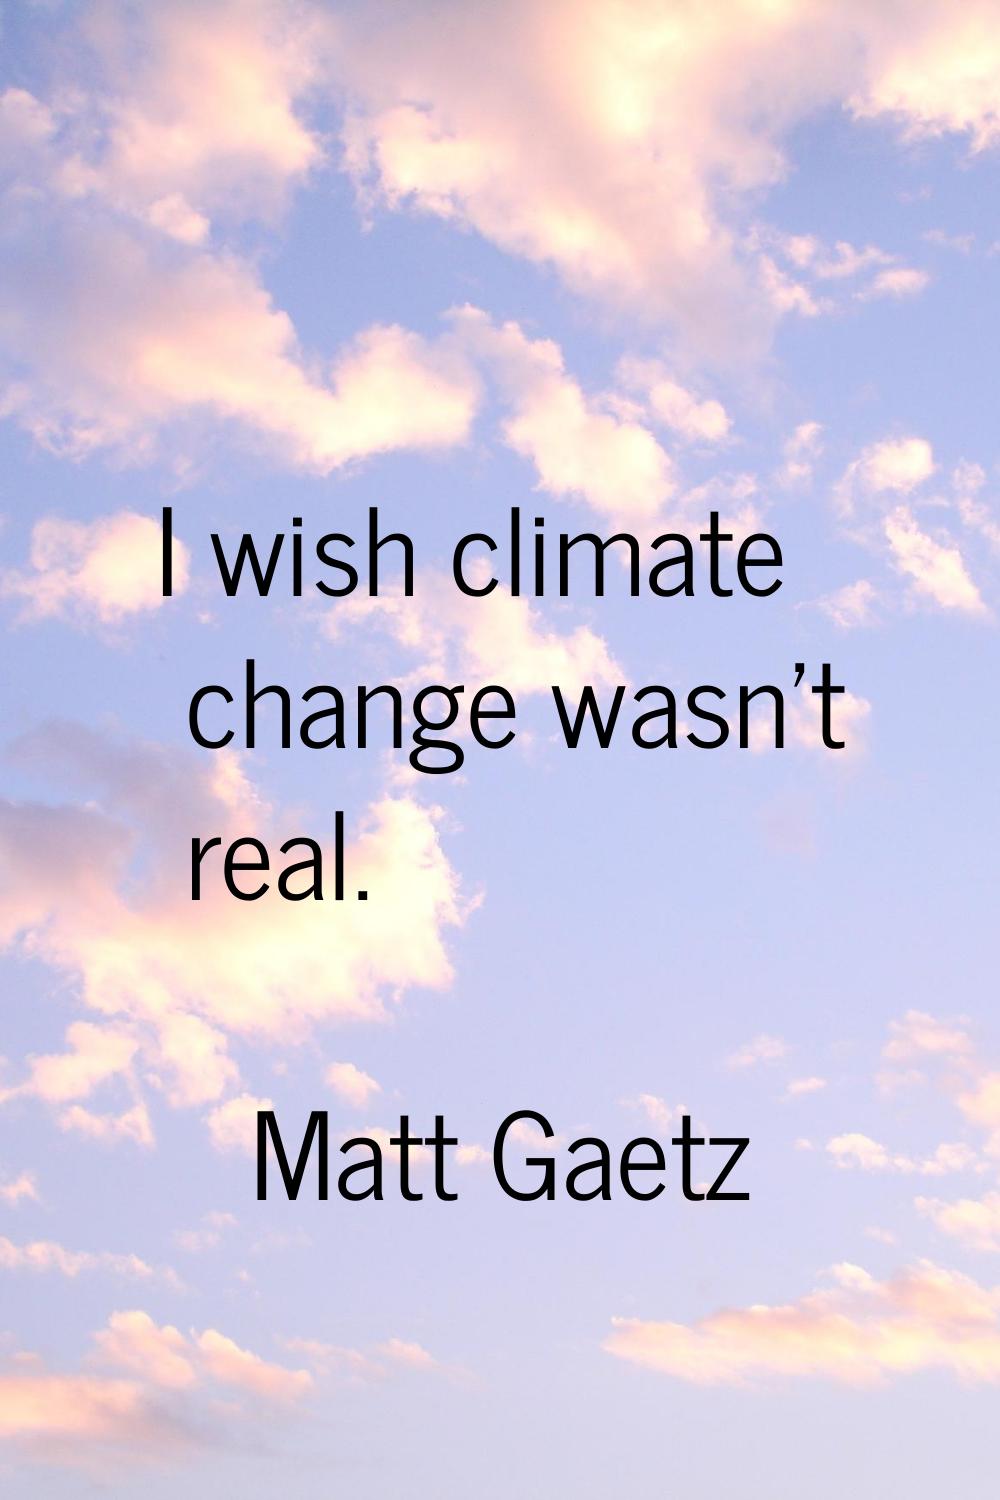 I wish climate change wasn't real.